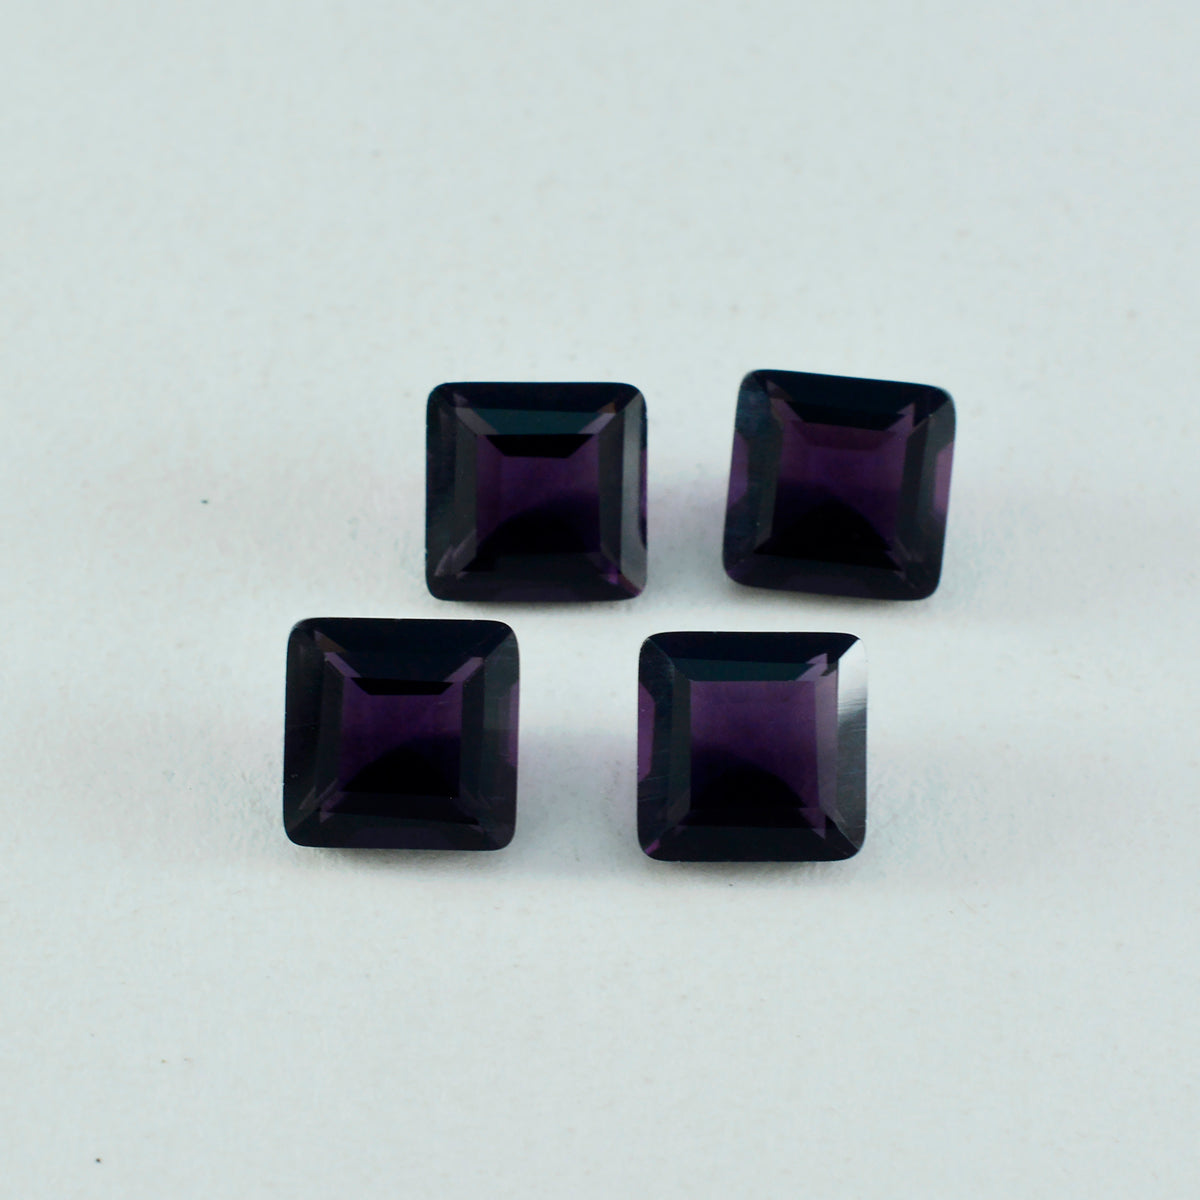 Riyogems 1PC Purple Amethyst CZ Faceted 13x13 mm Square Shape AA Quality Gem